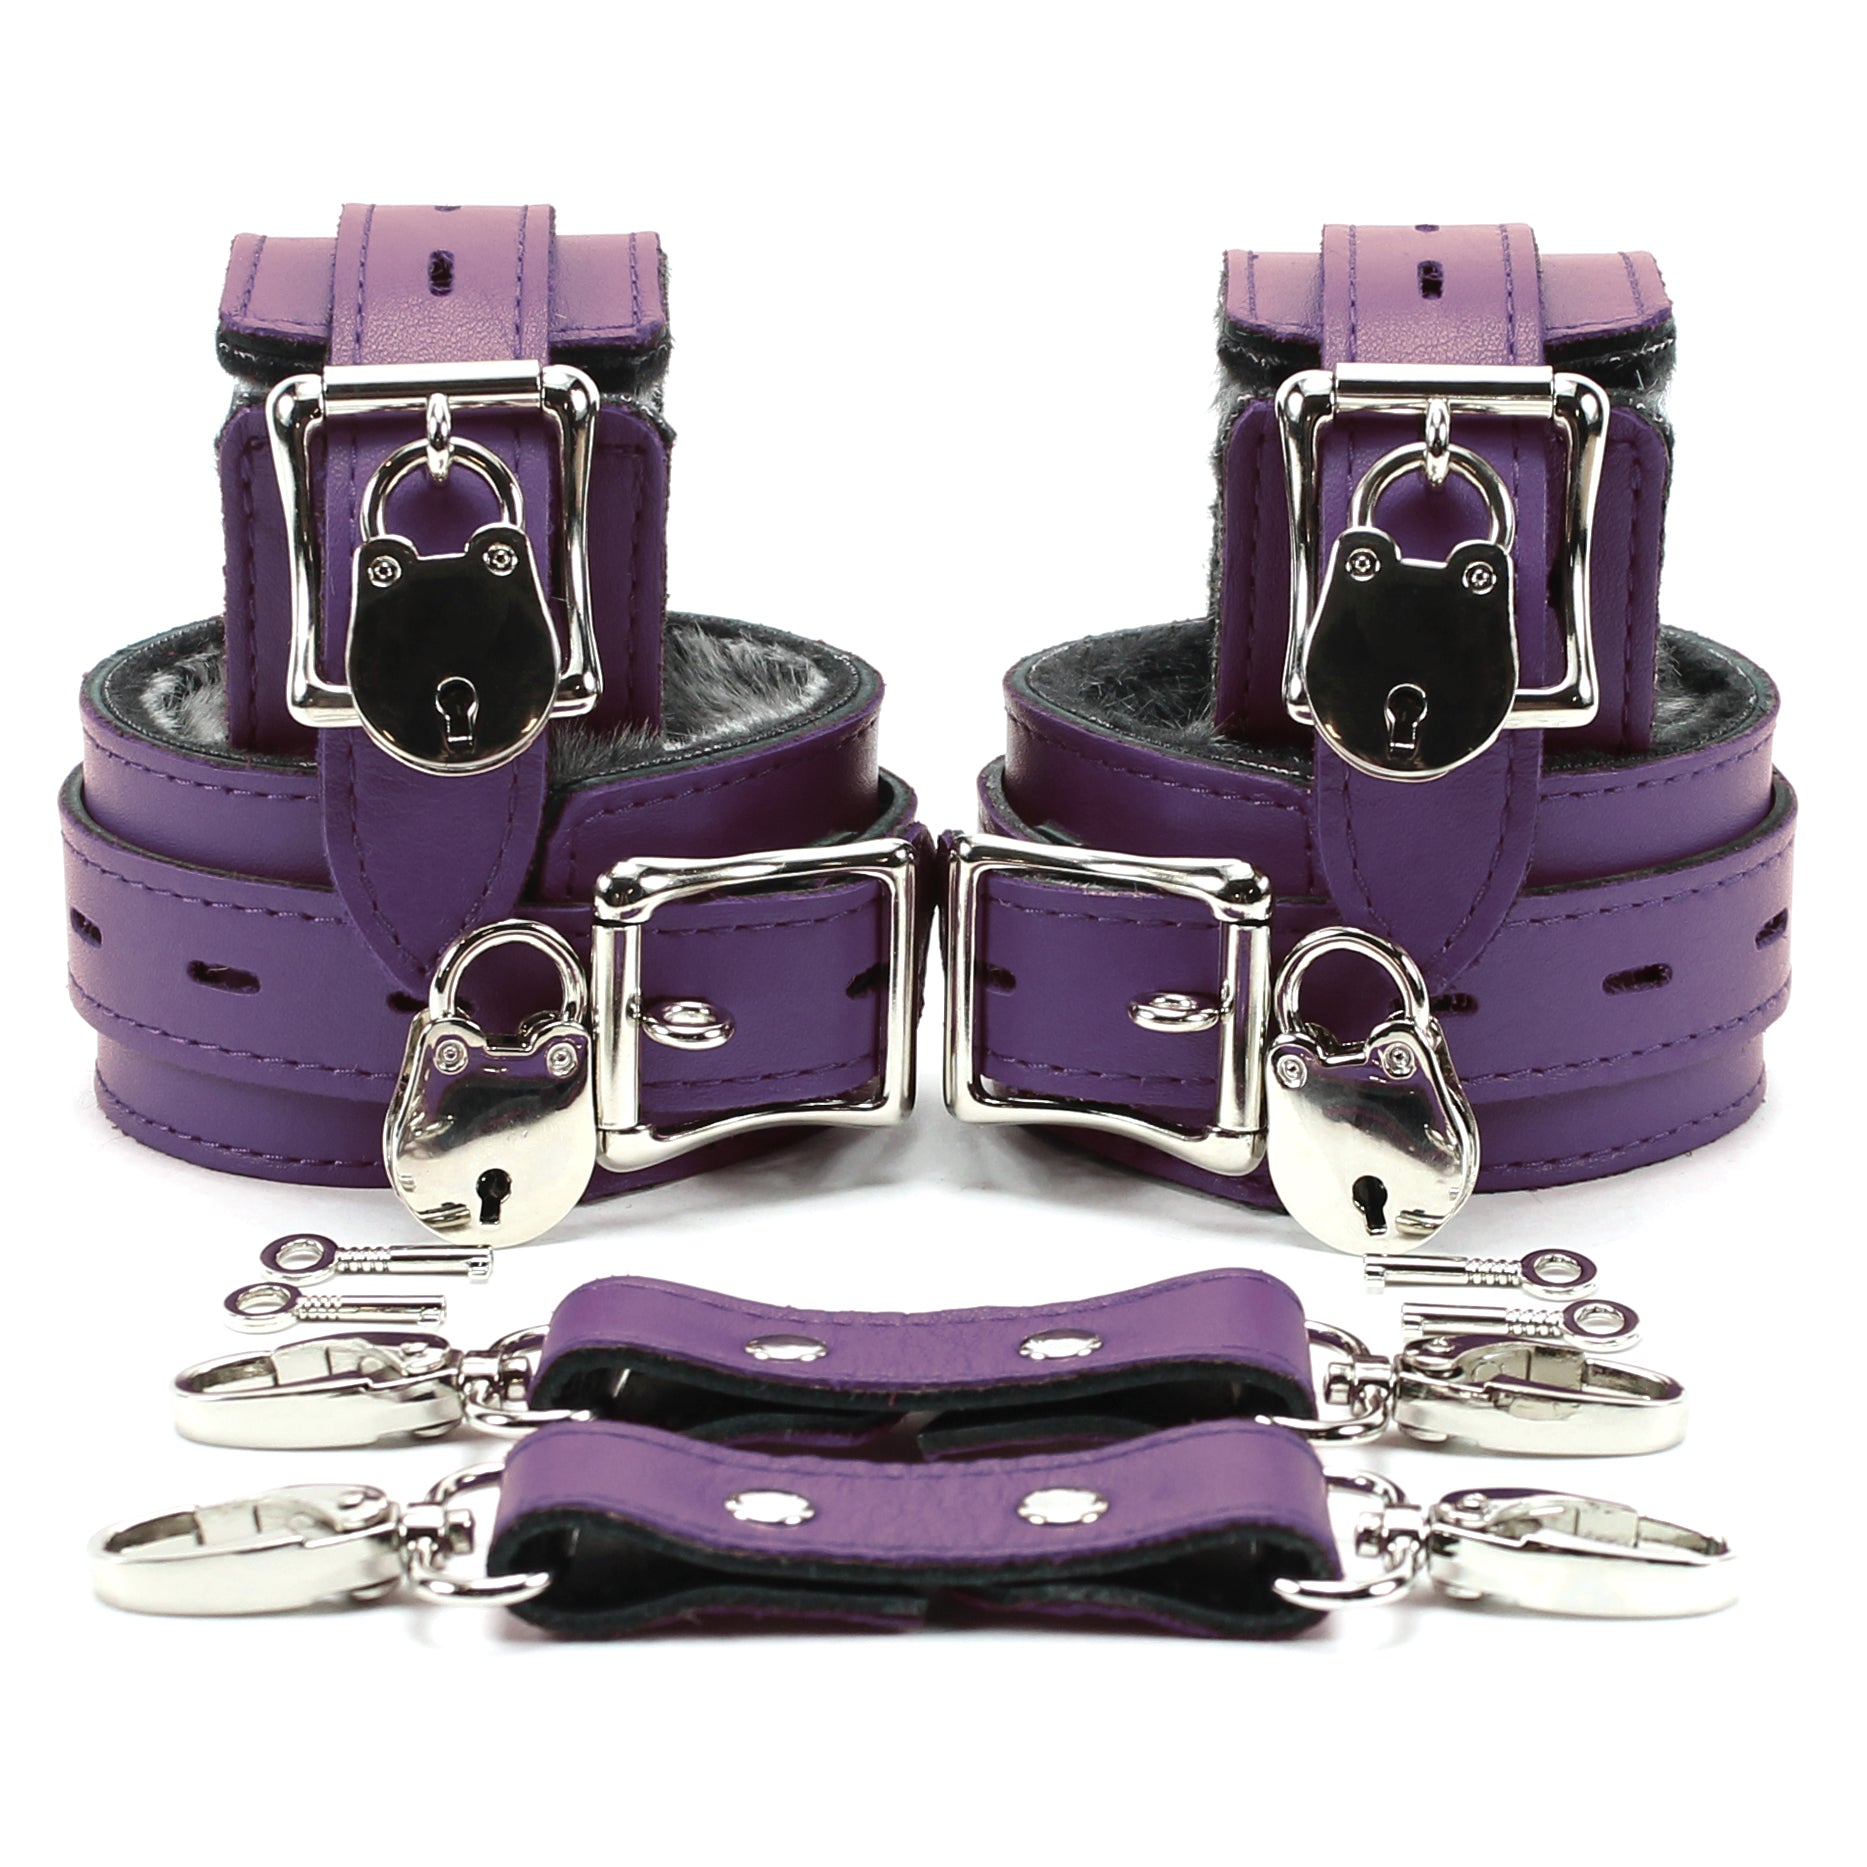 Berlin Locking Faux Fur Lined Leather BDSM Cuffs Purple